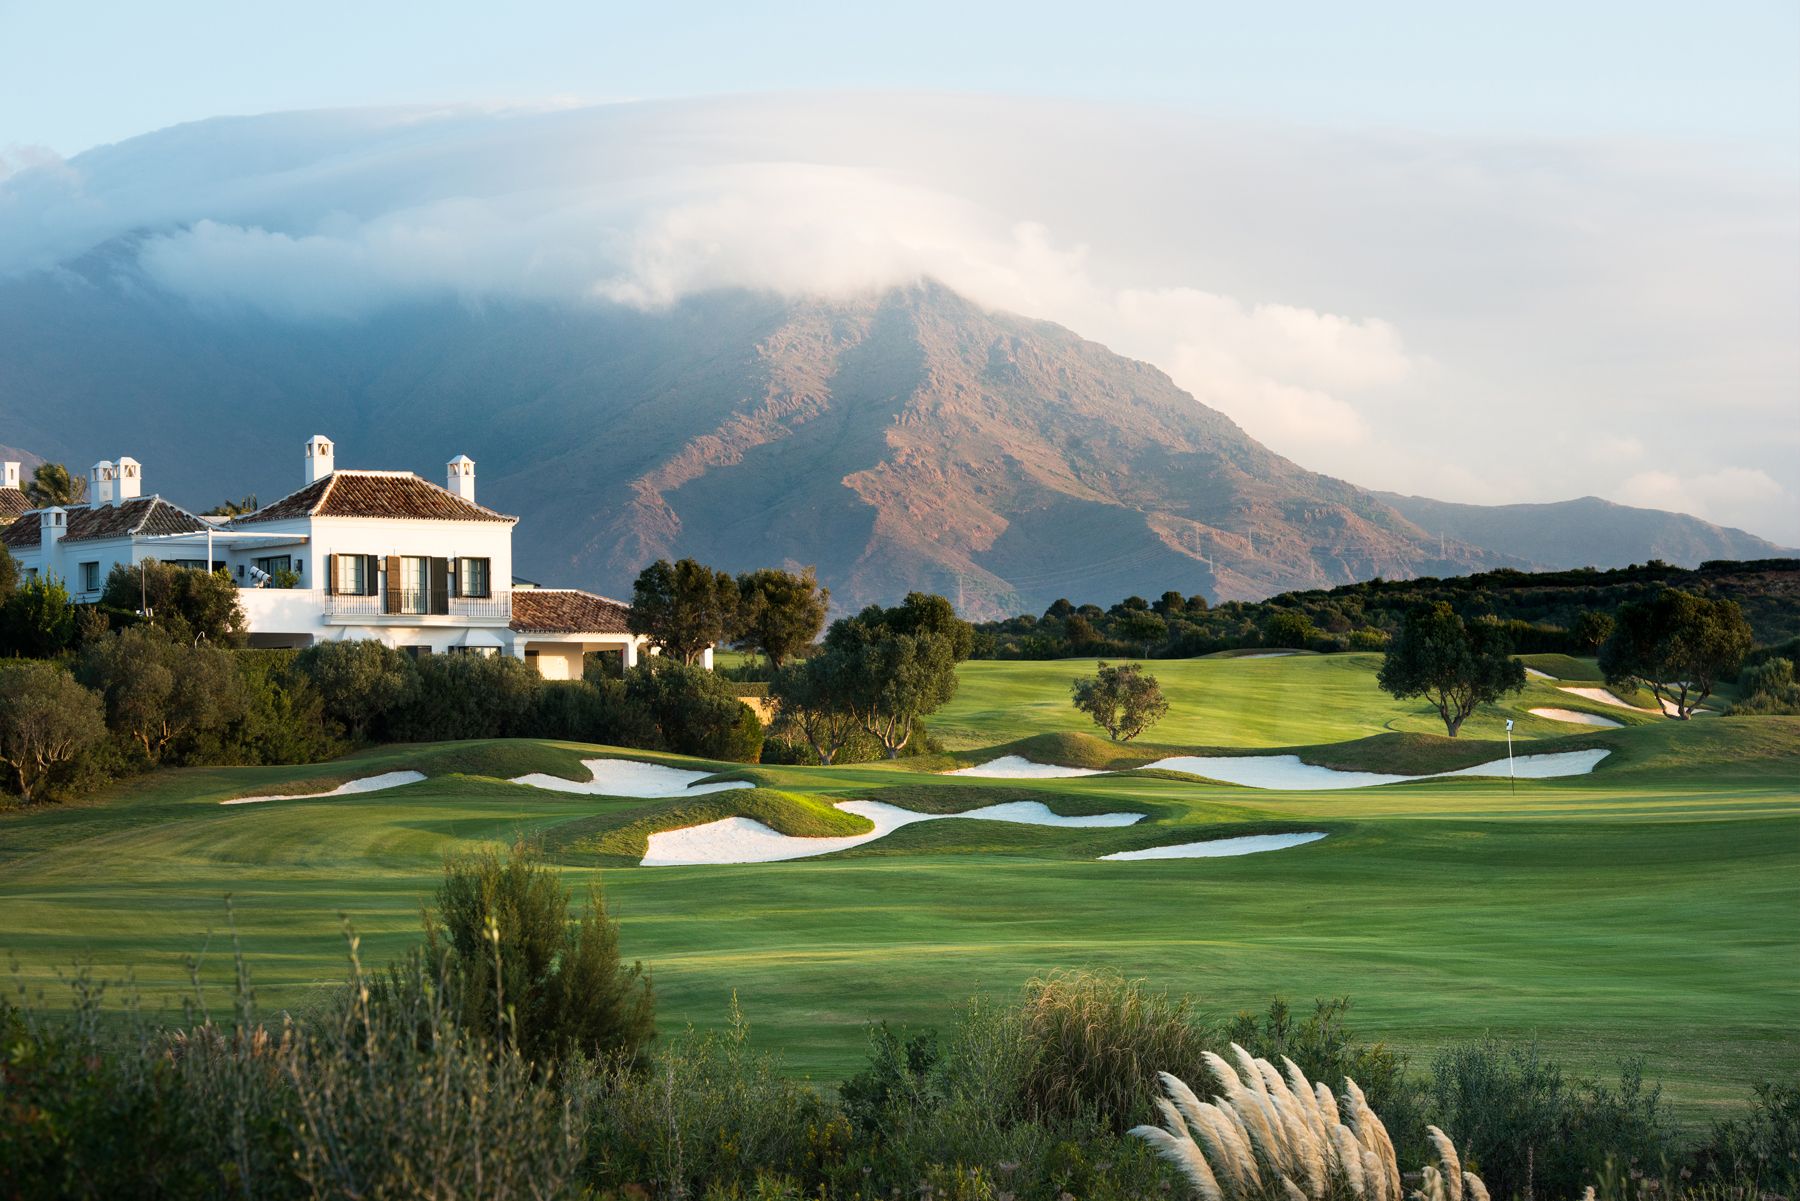 Finca Cortesin Golf Resort villa and golfing green with beautiful mountain